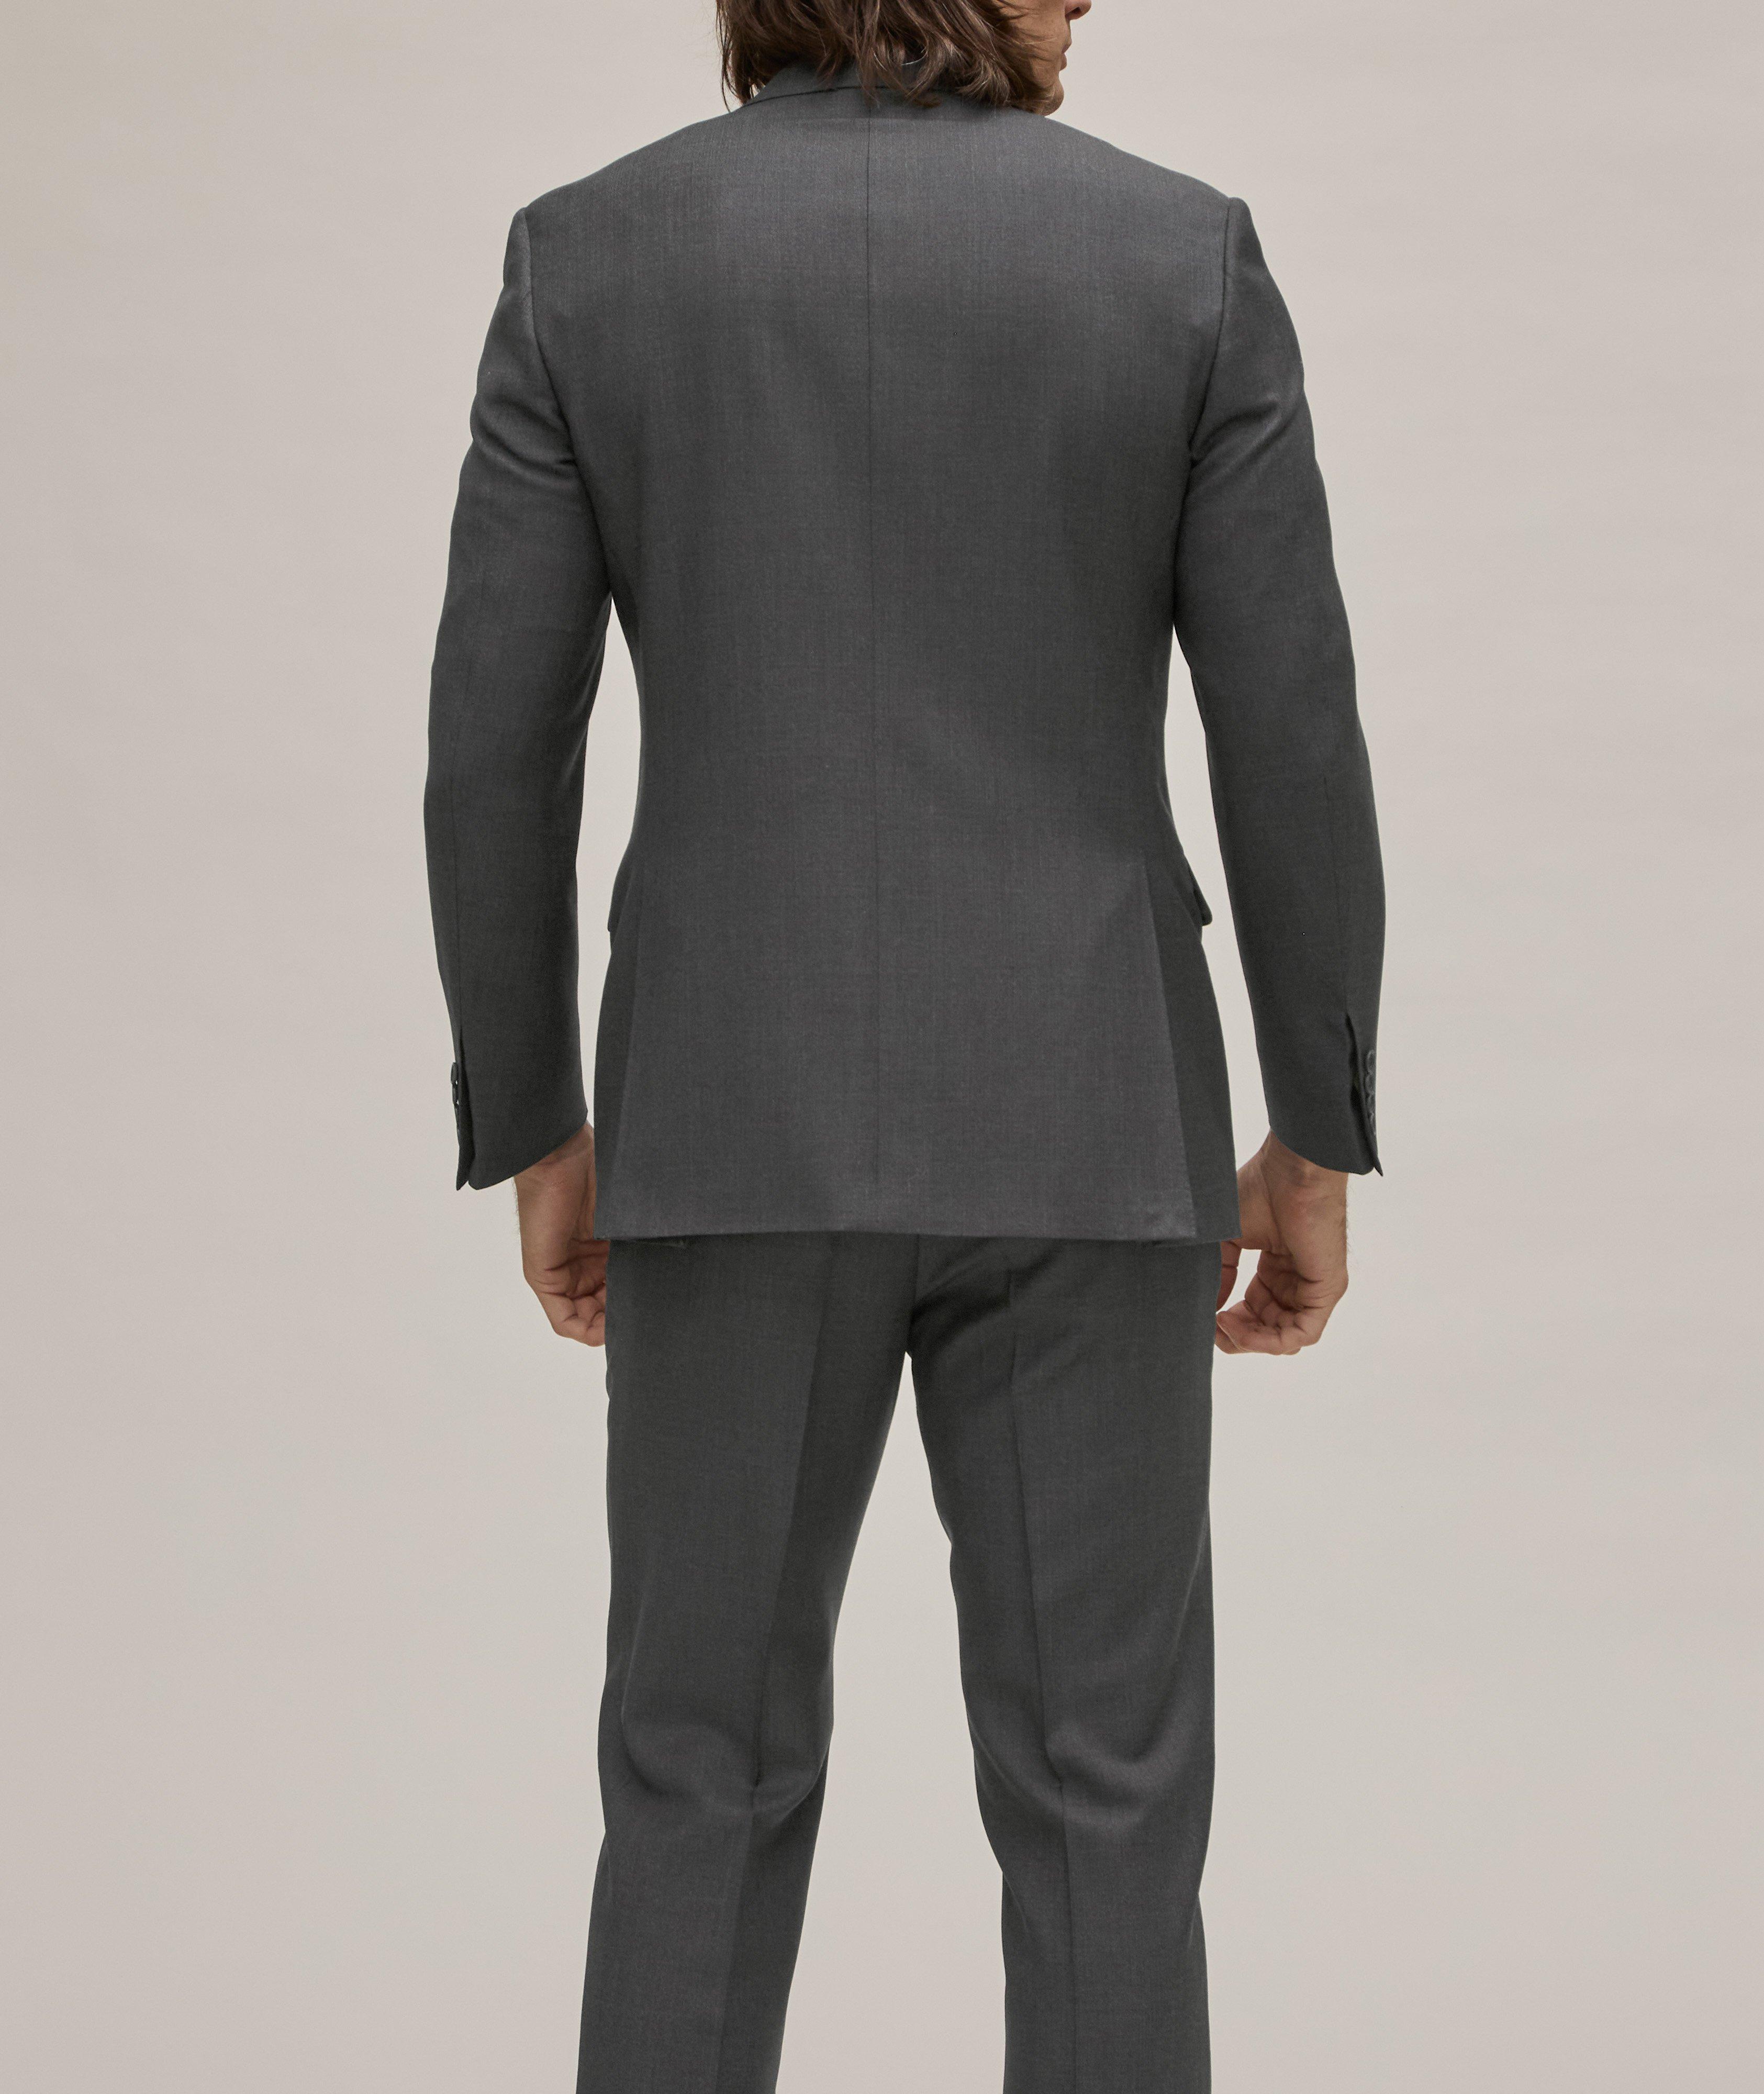 Impeccabile Textured Wool Suit image 2